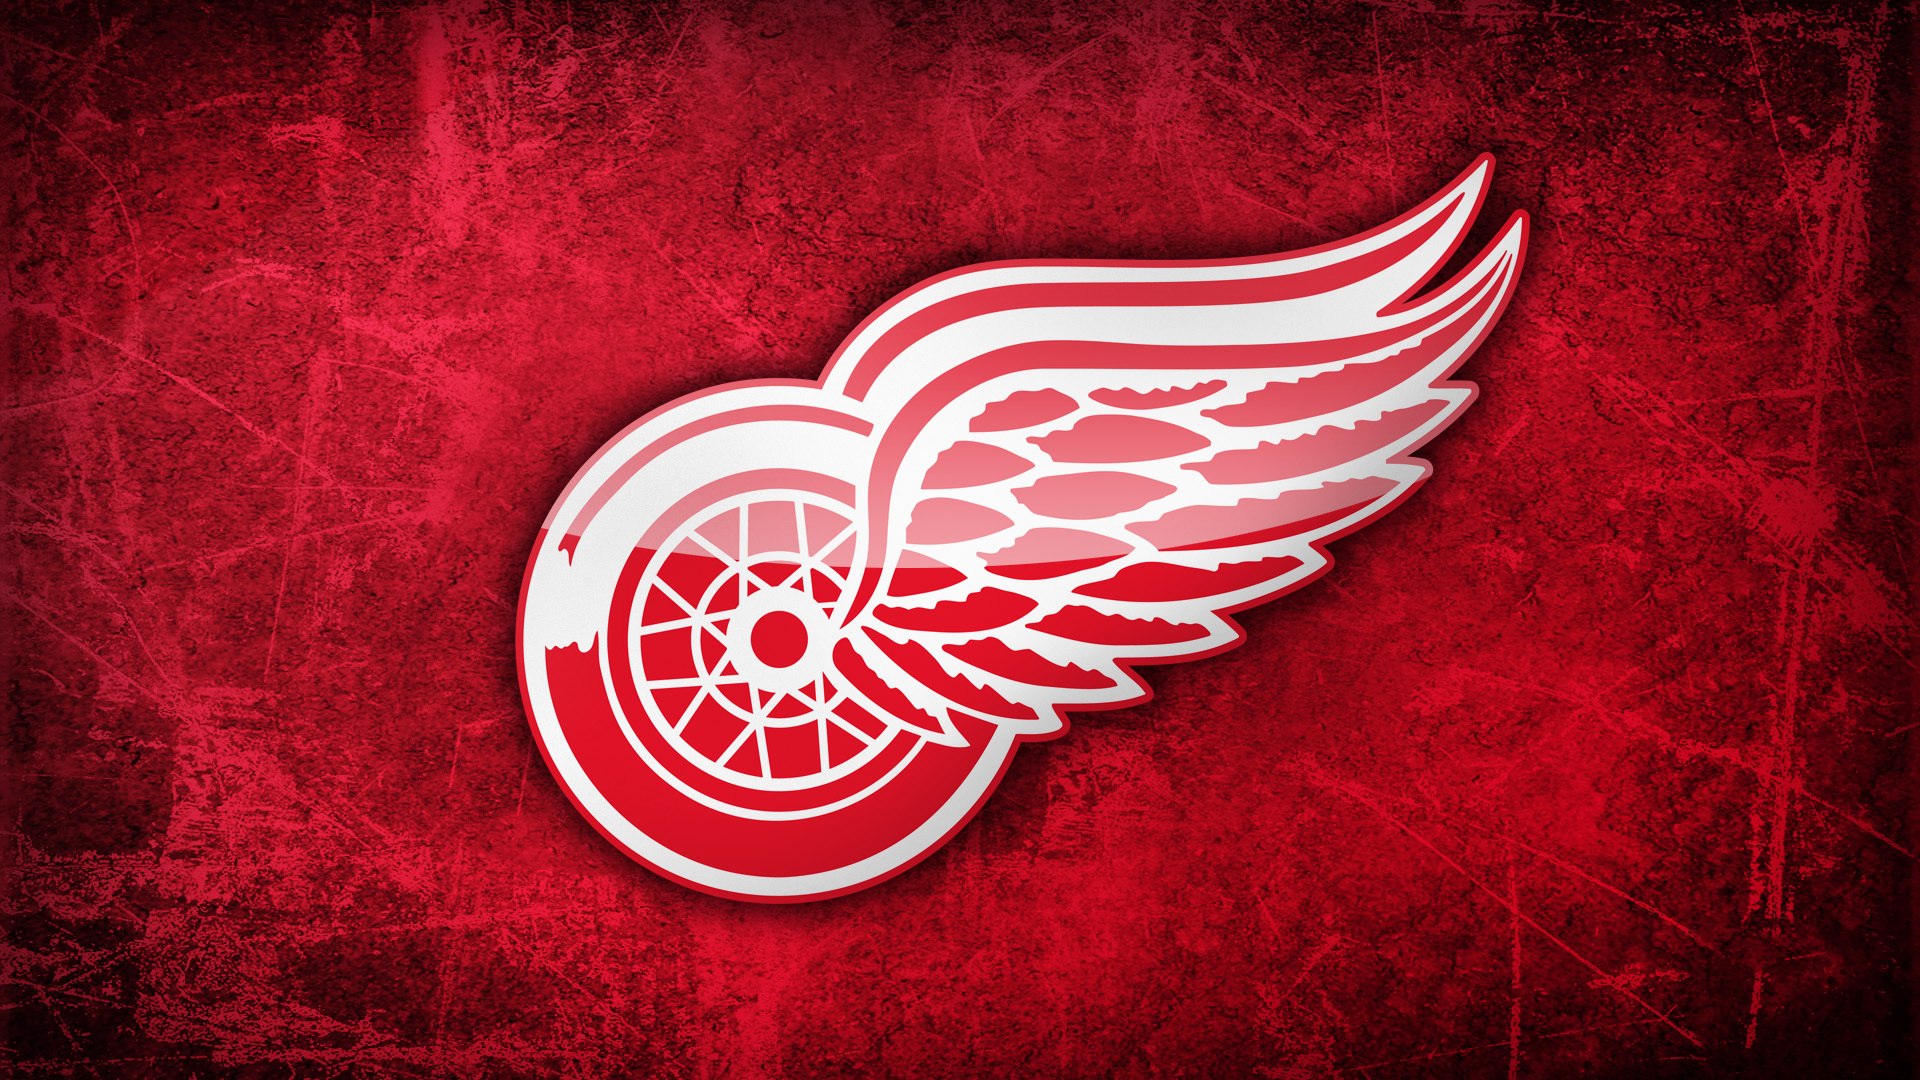 detroit red wings, sports, emblem, logo, nhl, hockey